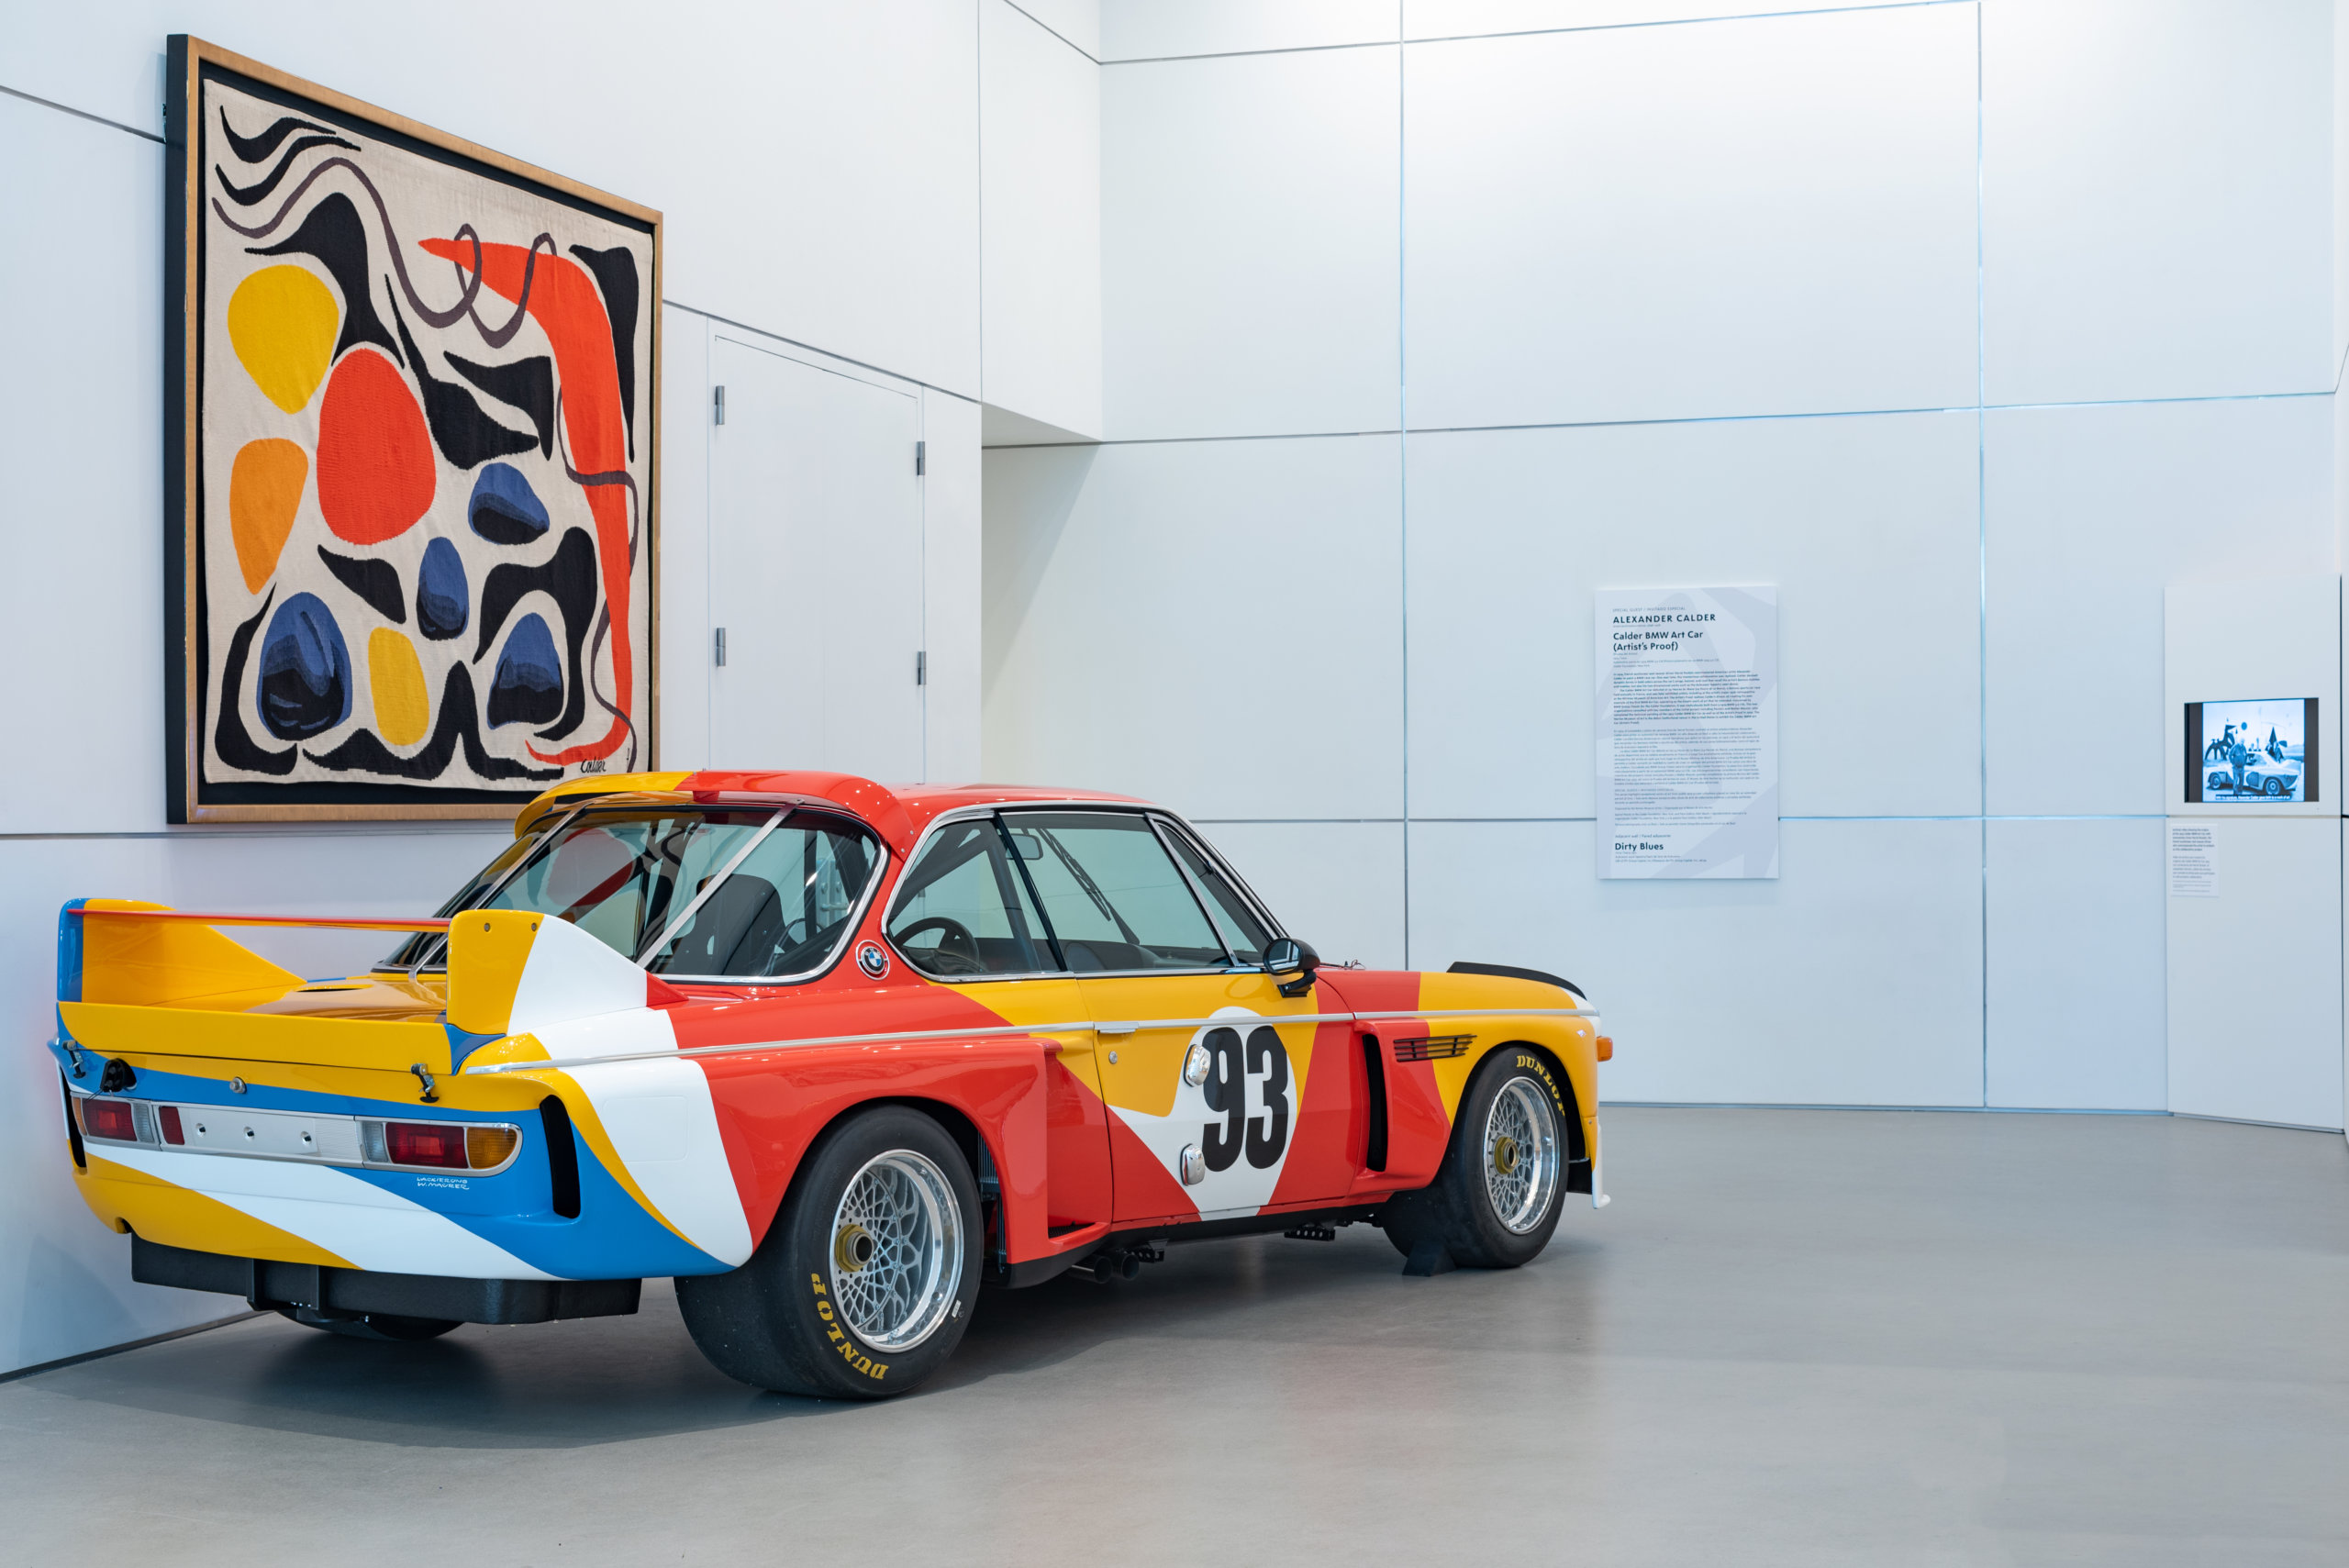 Calder Car: Installation of Special Guest: Calder BMW Art Car at the Norton Museum of Art (November 13, 2021 – April 24, 2022). Courtesy of Calder Foundation, New York. © 2021 Calder Foundation, New York / Artists Rights Society (ARS), New York. Photo: Ashley Kerr.